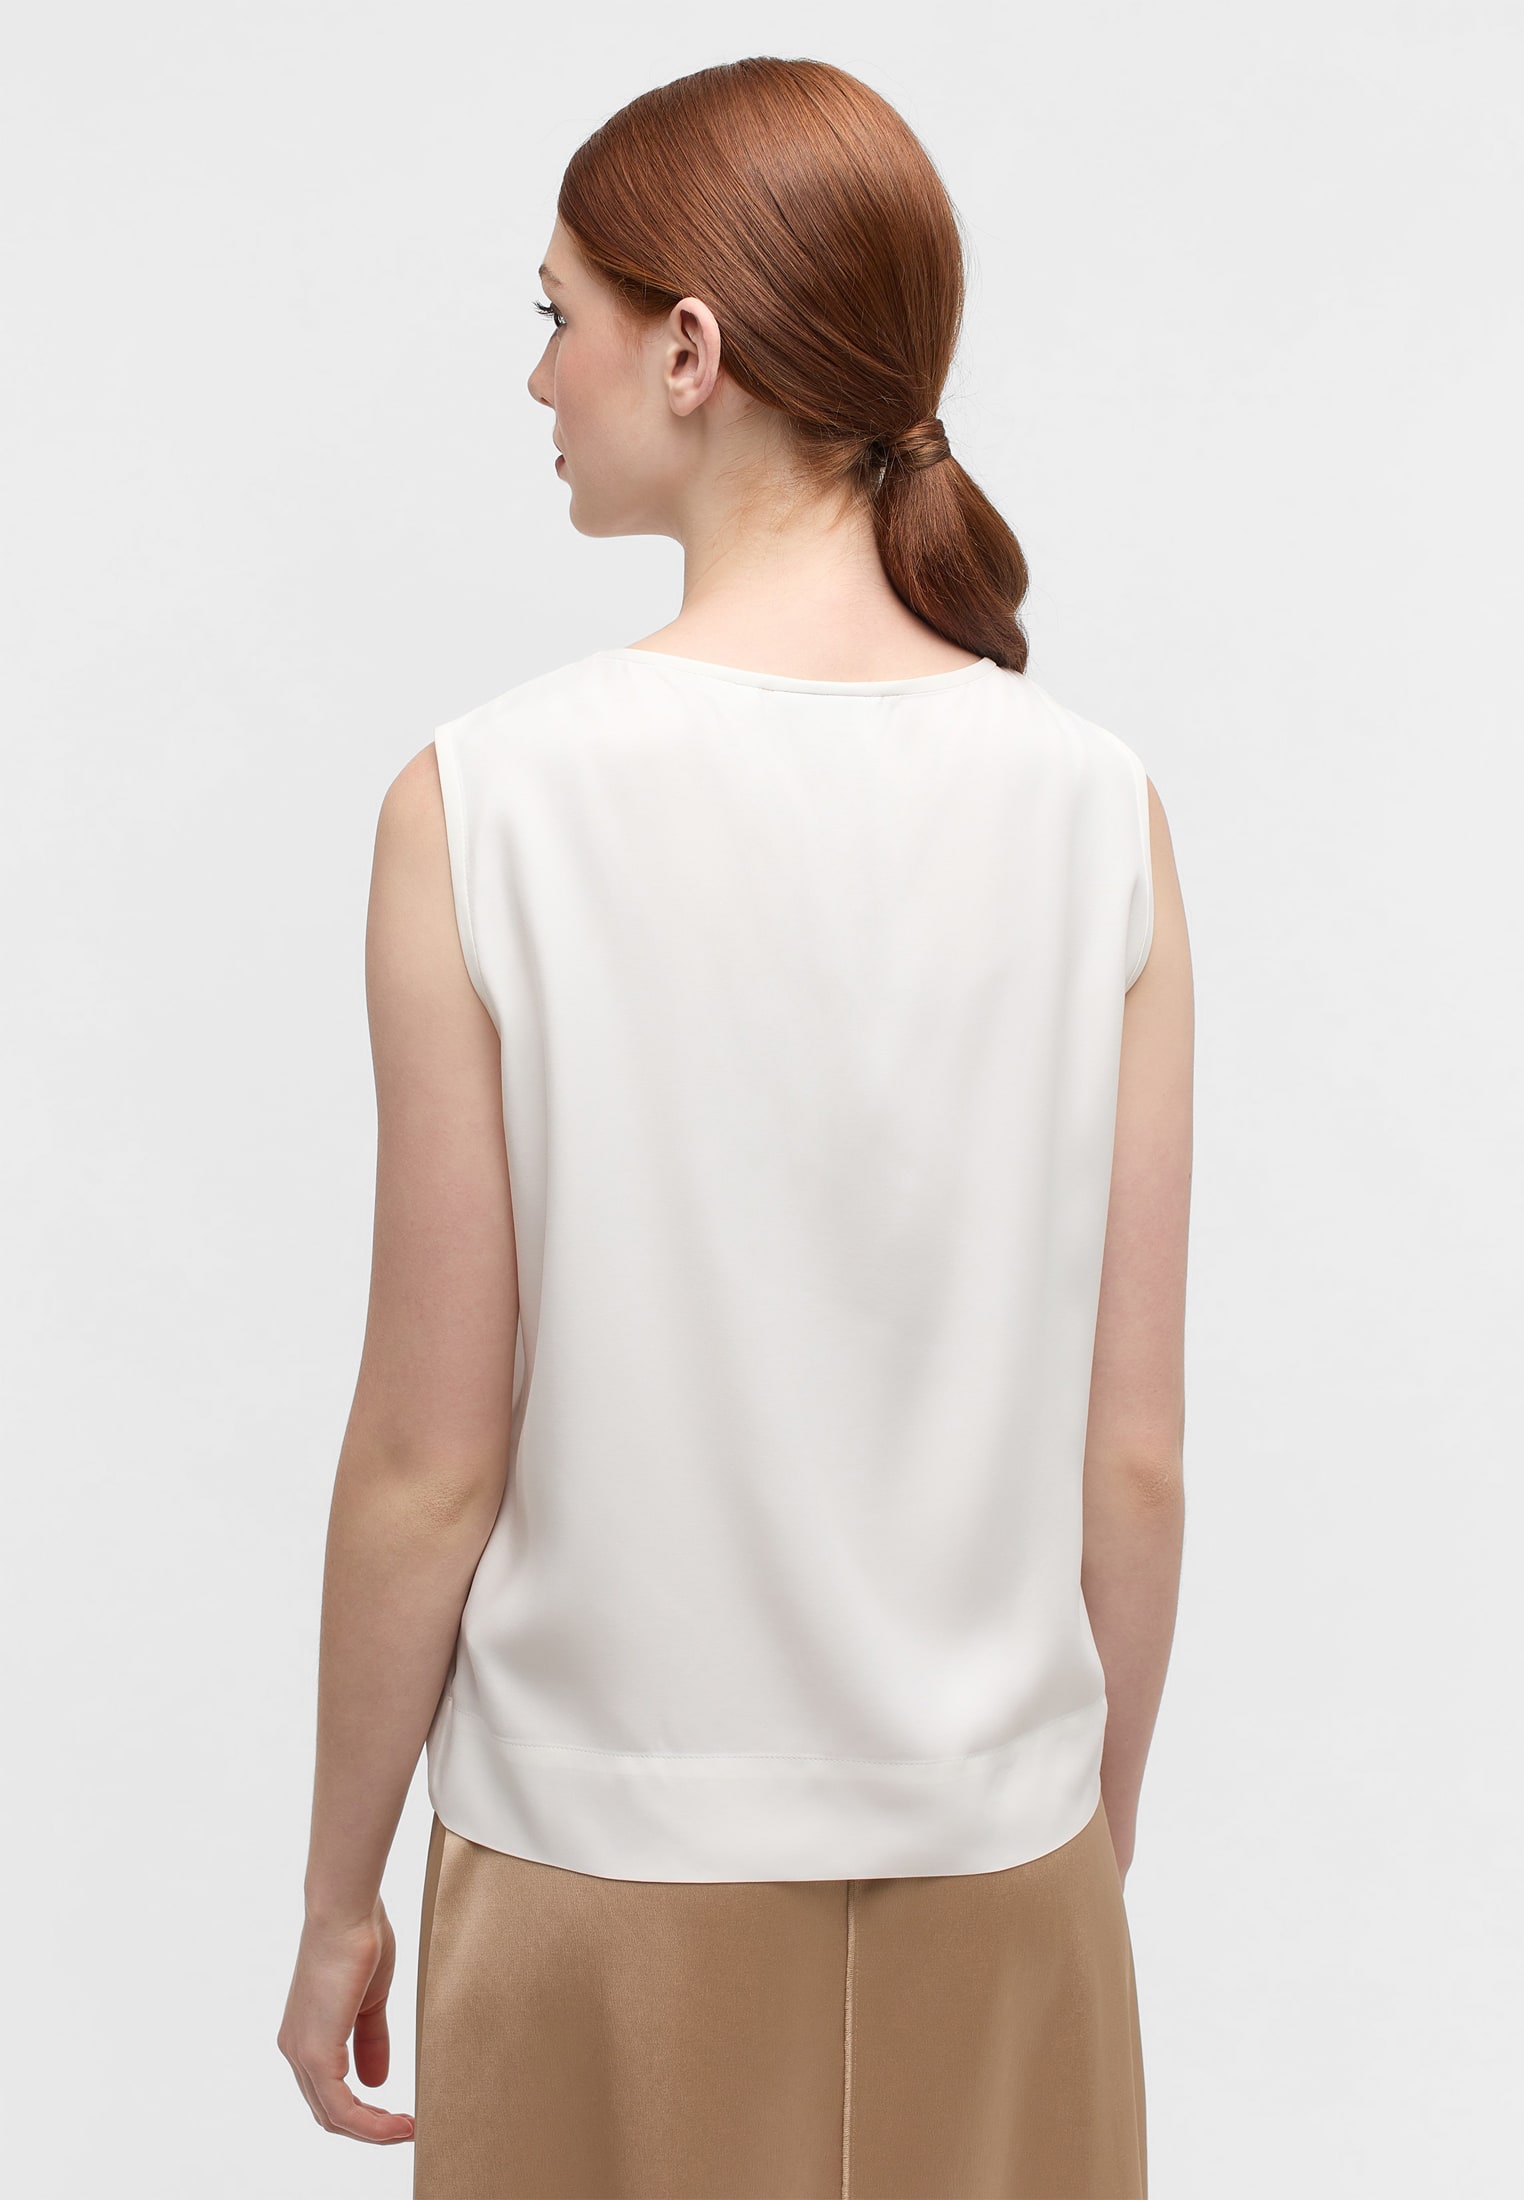 Viscose Shirt Bluse in off-white unifarben | off-white | 54 | ohne Arm |  2BL04345-00-02-54-sl